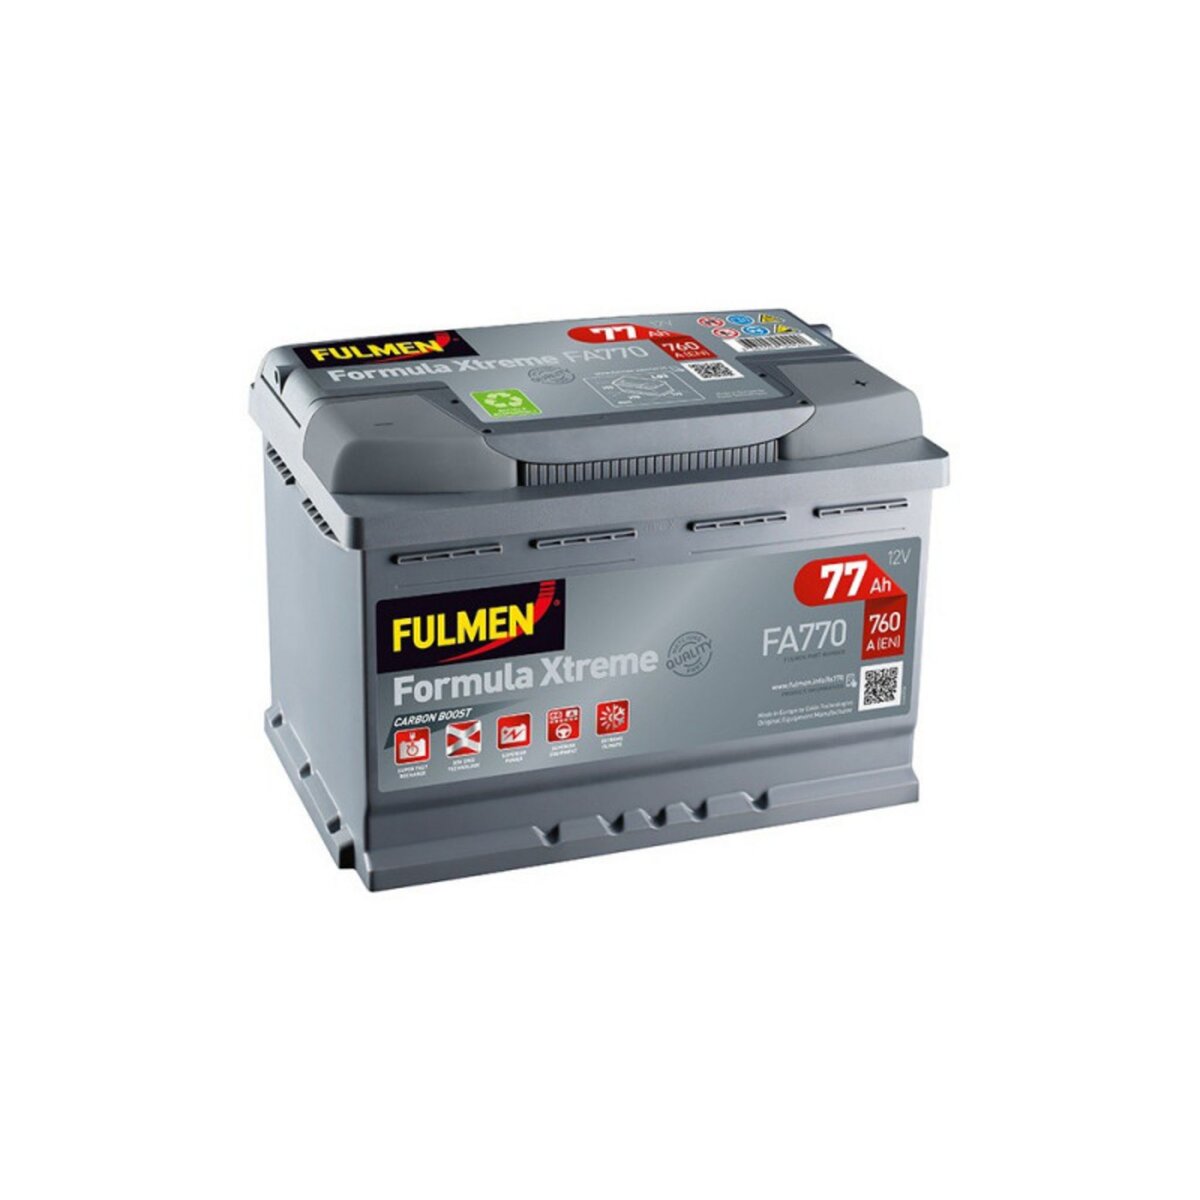 FULMEN Batterie FULMEN Formula XTREME FA770 12v 77AH 760A